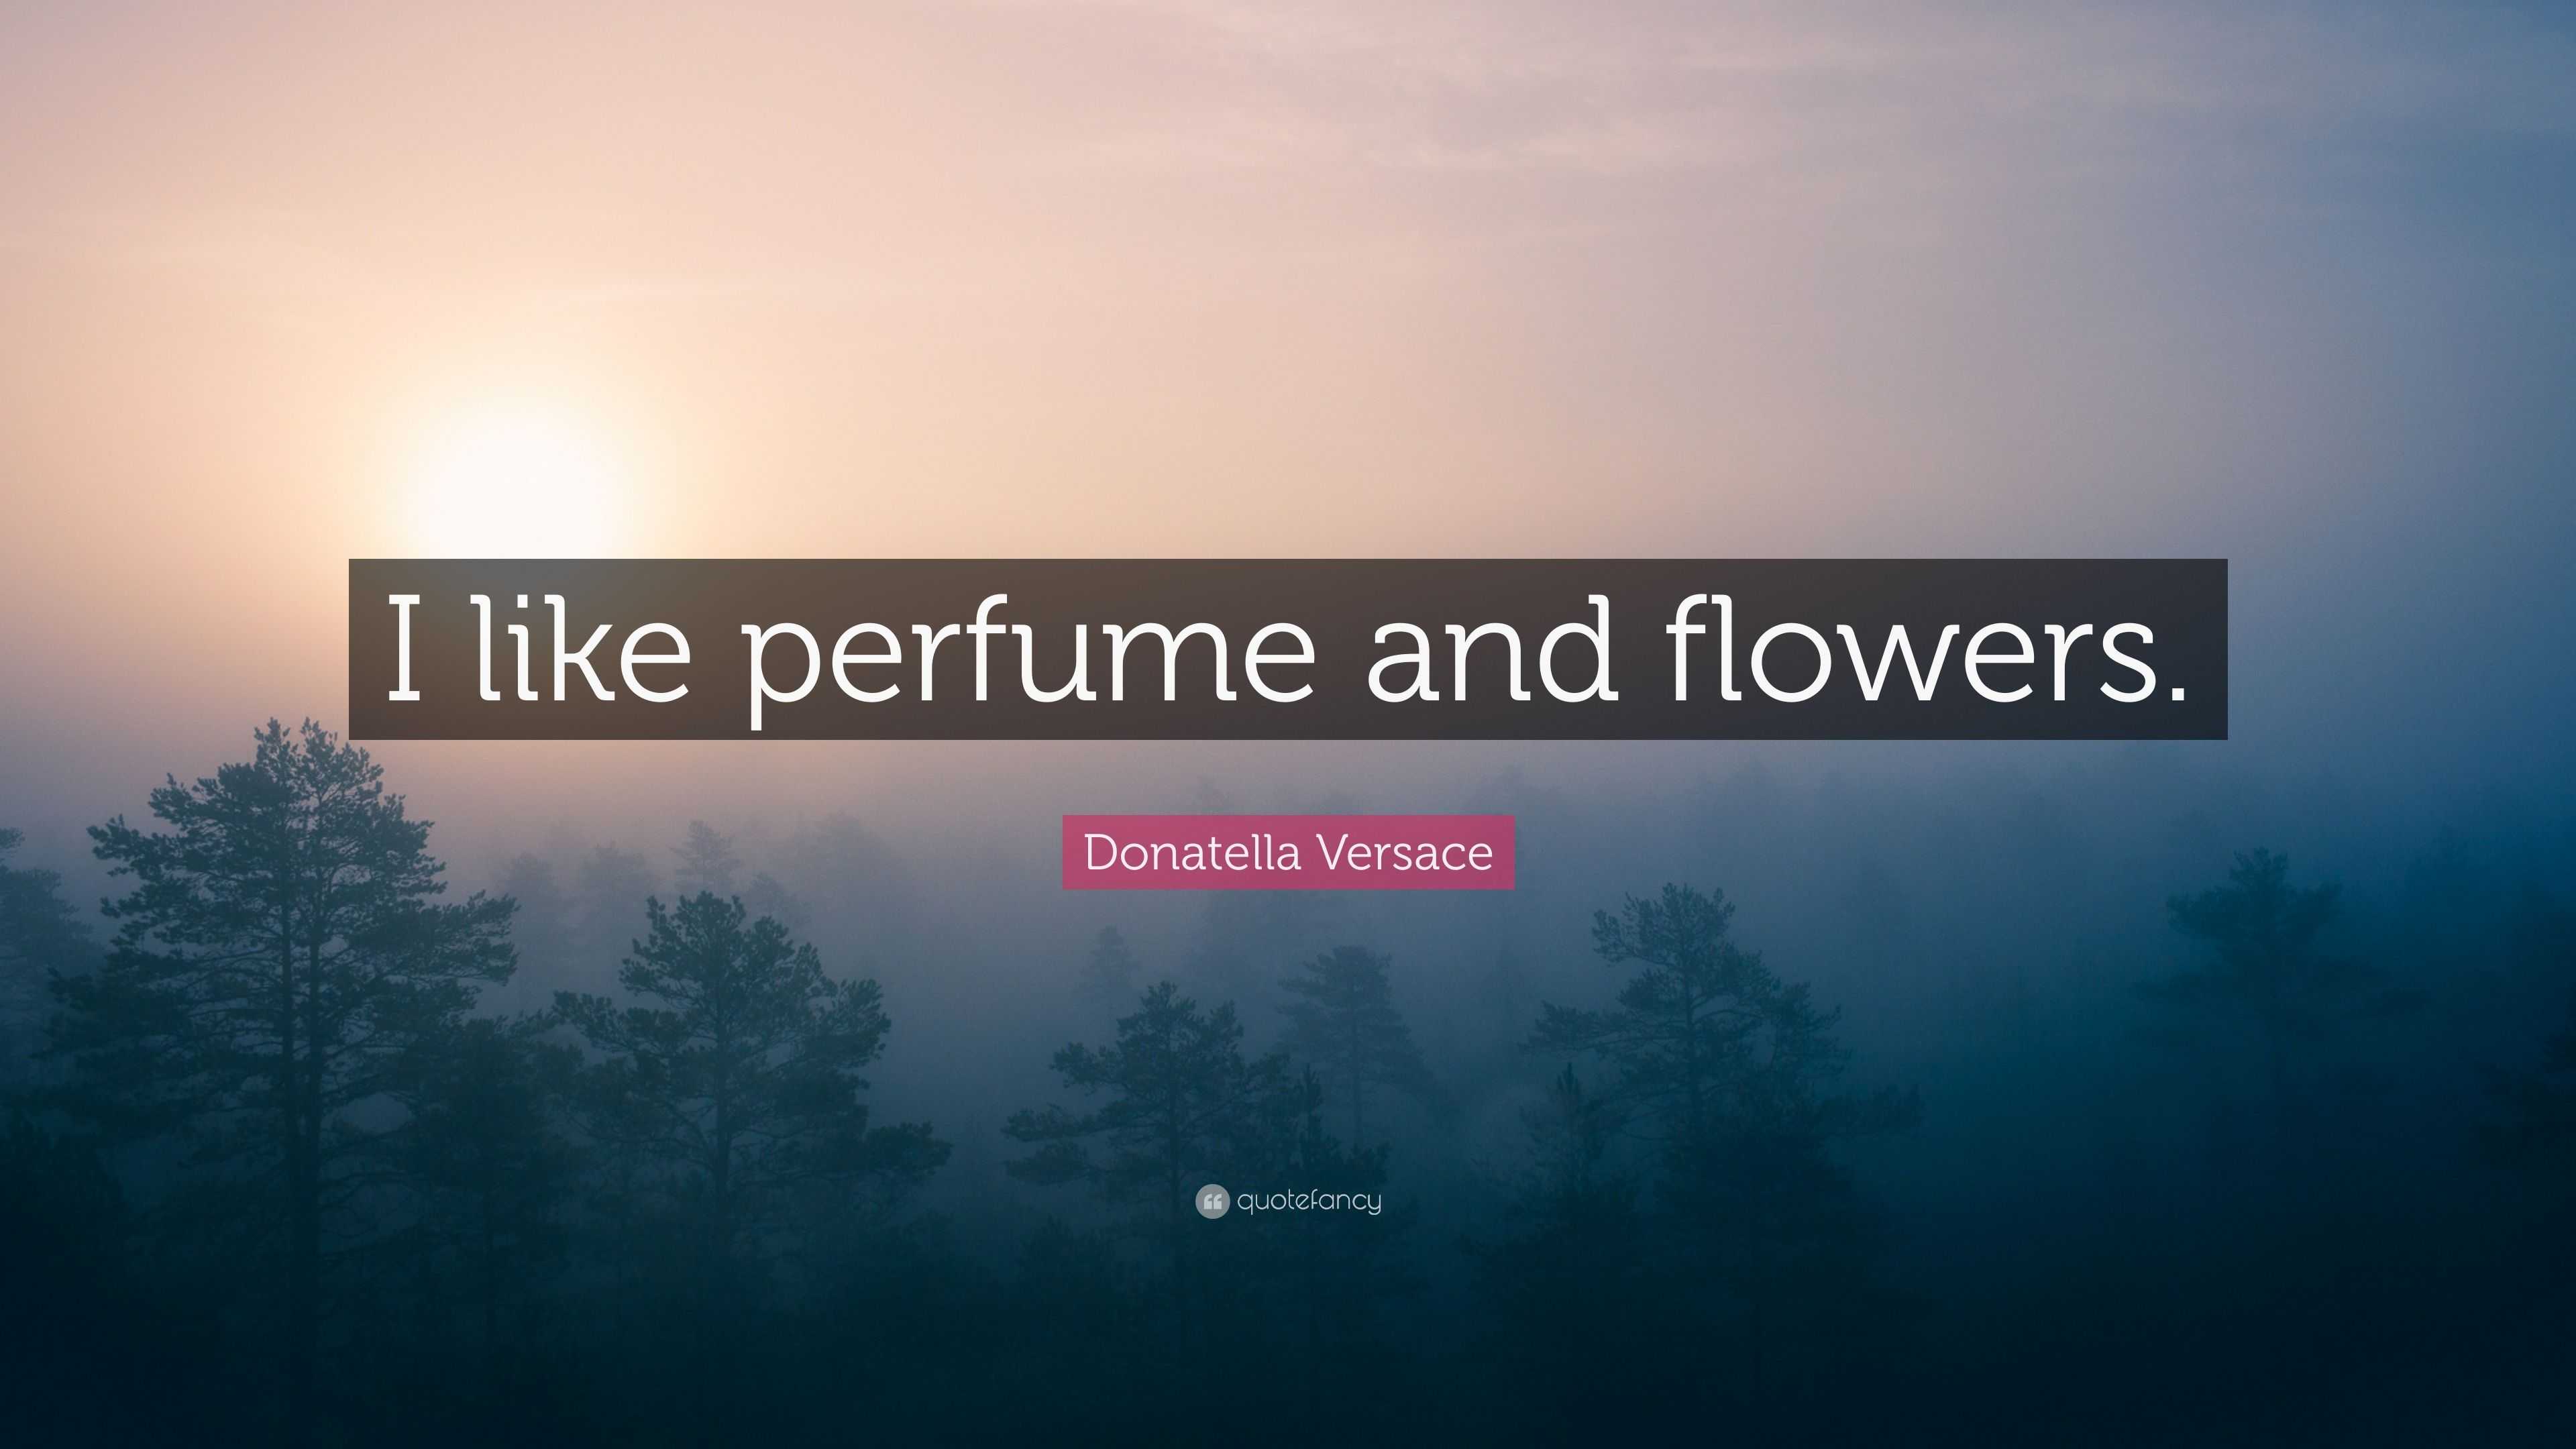 Donatella Versace Quote: “I like perfume and flowers.”